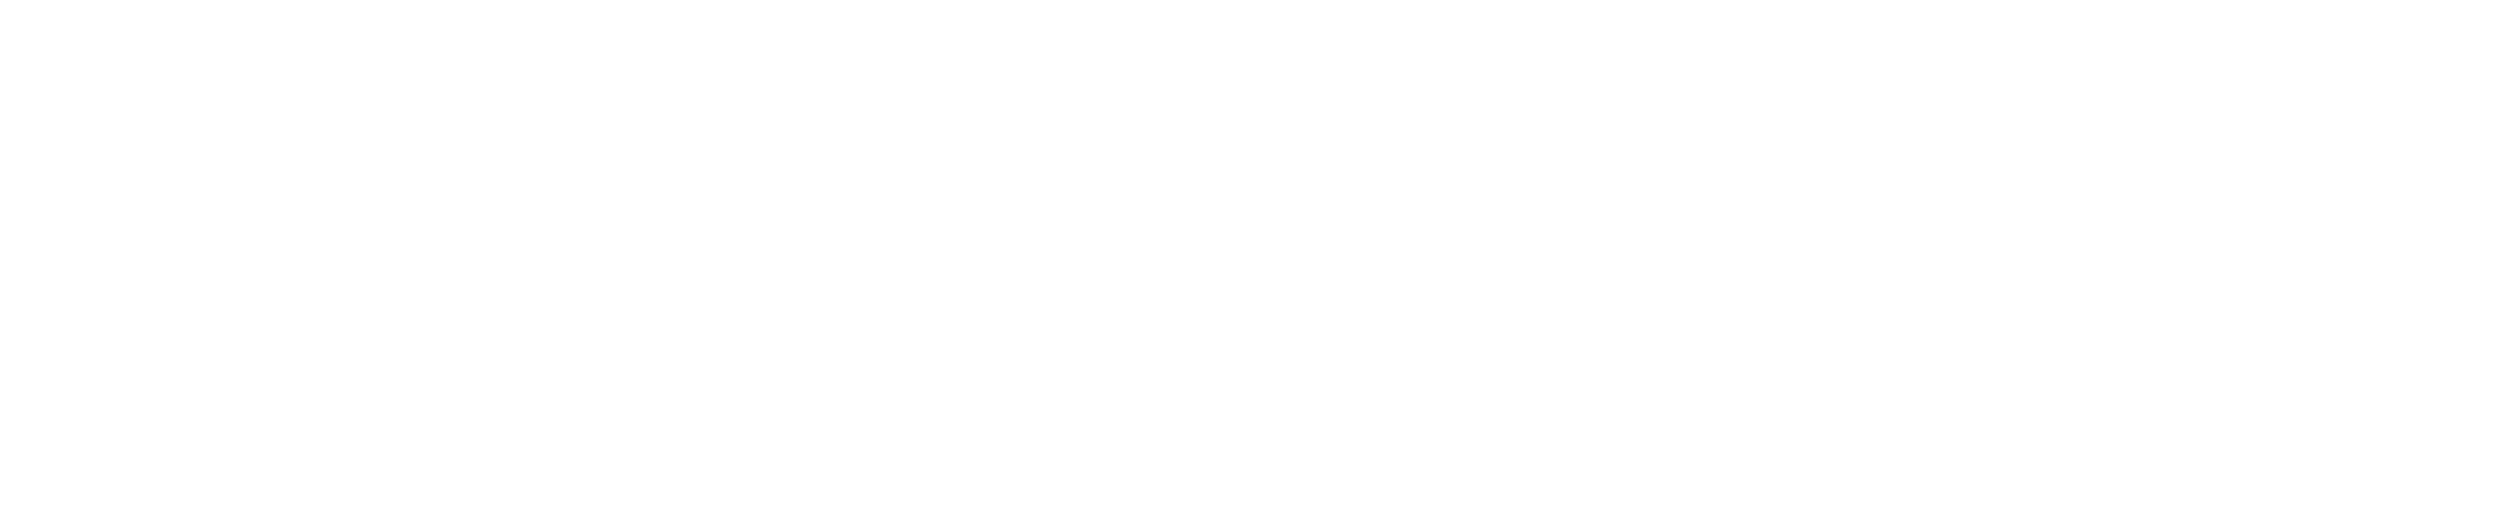 Vic Firth White Logo.png